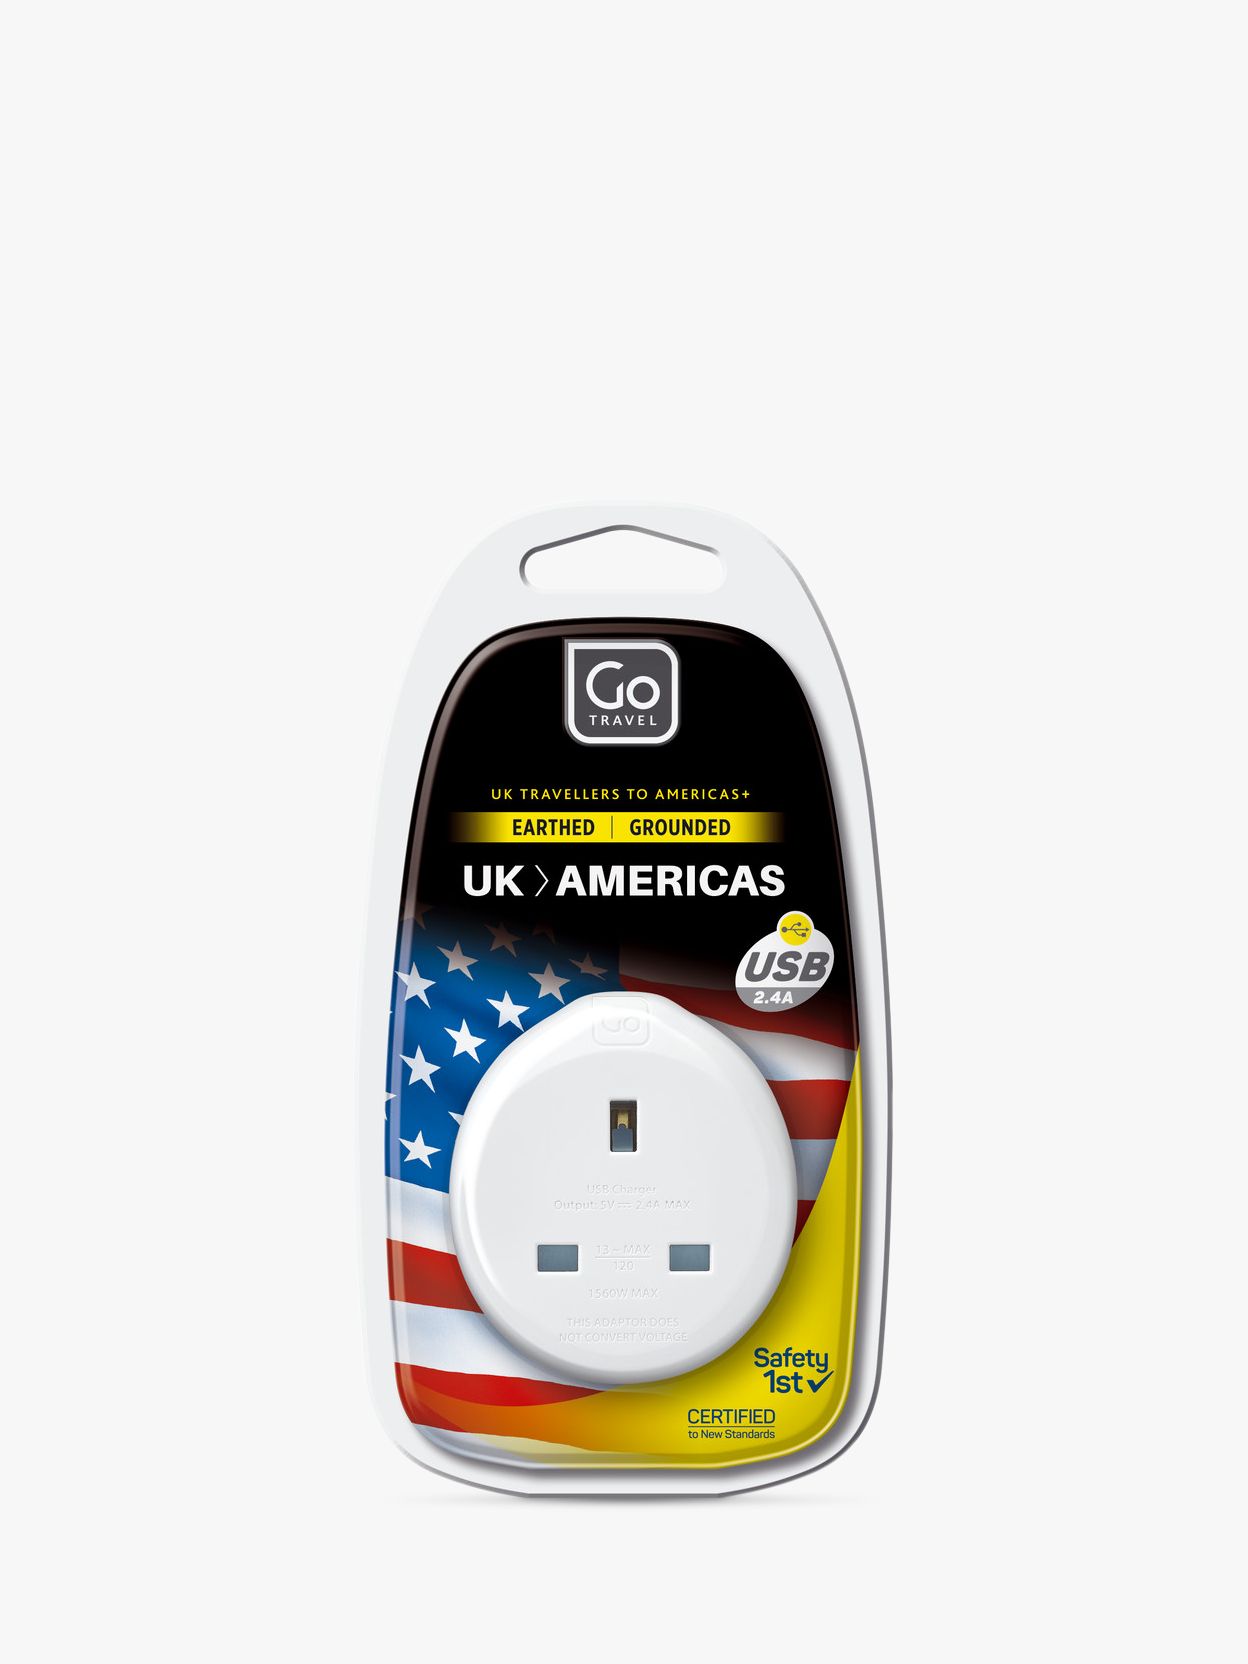 Go Travel USB UK to USA Travel Adaptor